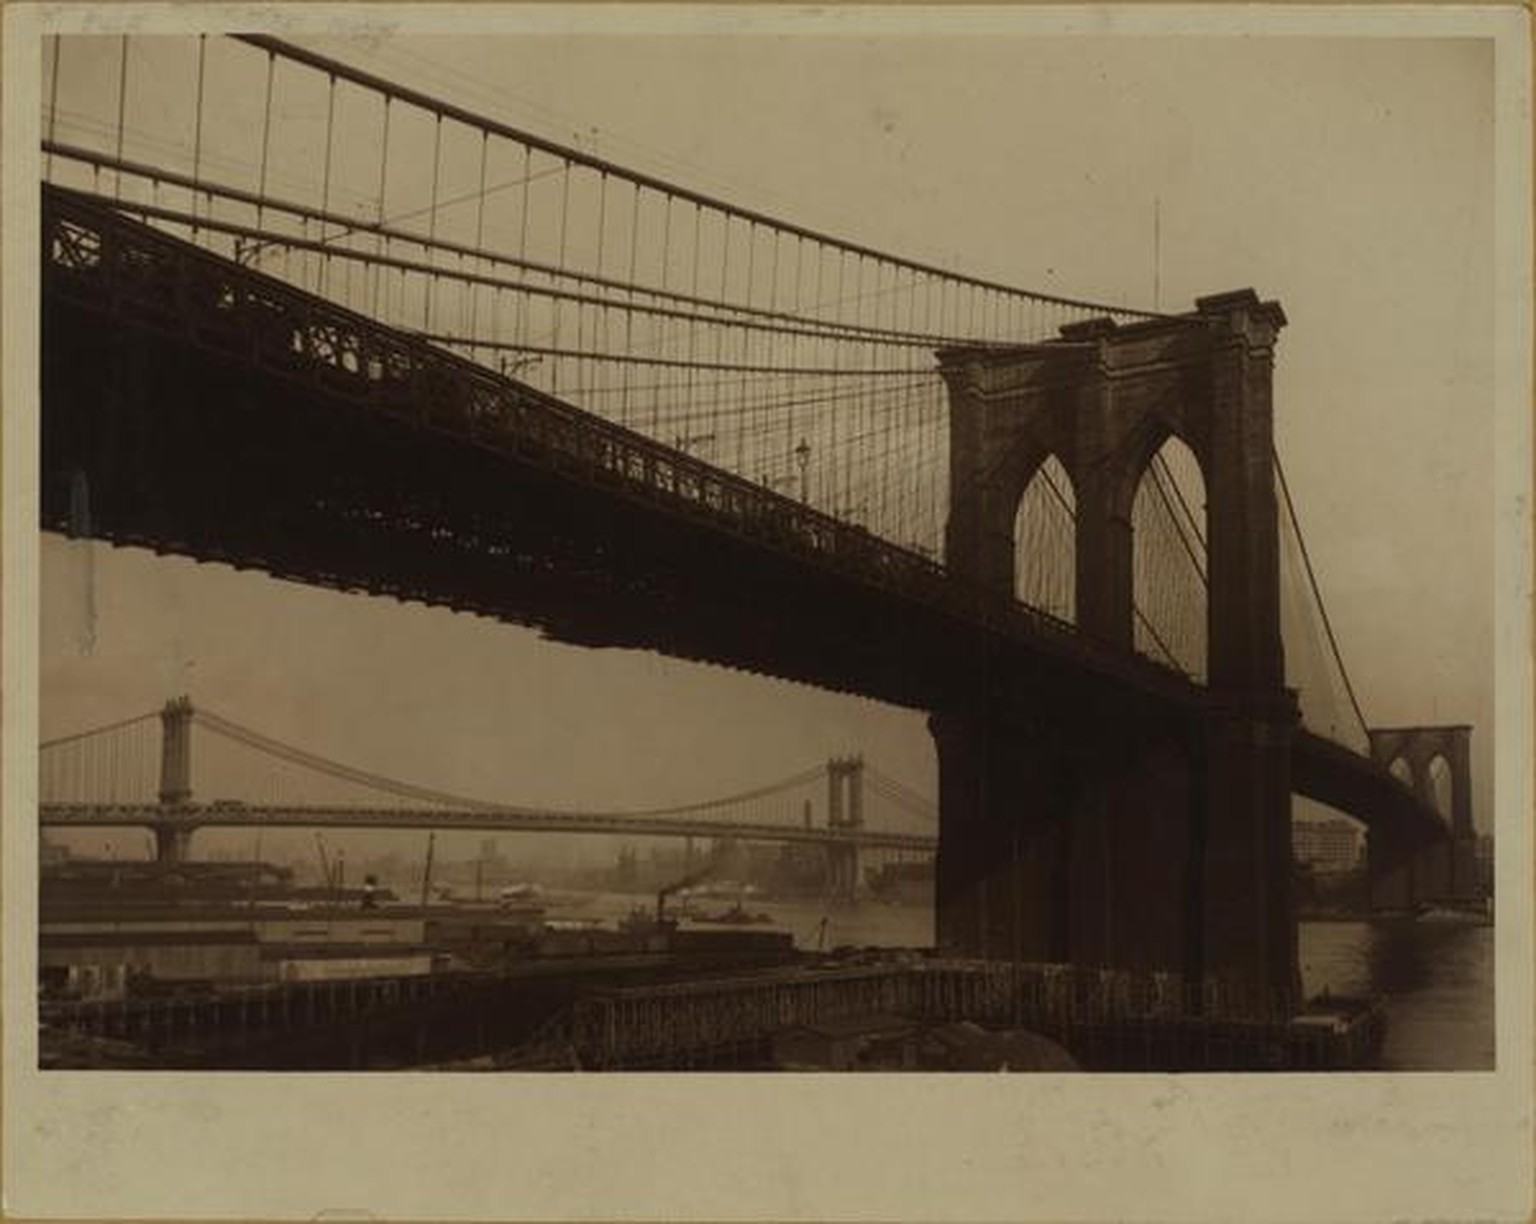 1924: View of the Brooklyn Bridge looking toward Manhattan.